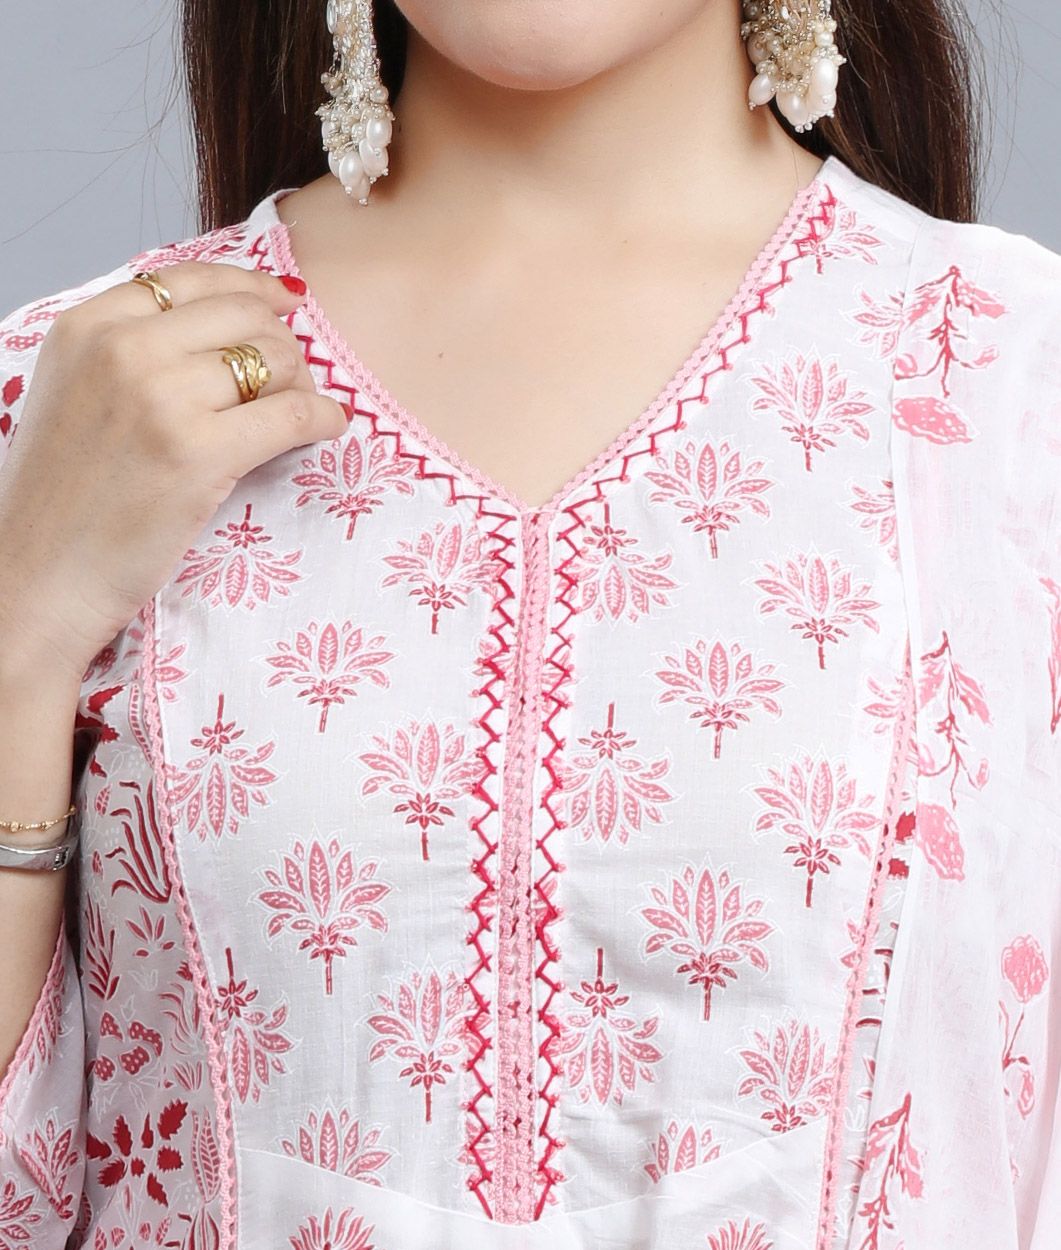 White & Pink Jaipuri Cotton A Line Kurta Pants Suit Set